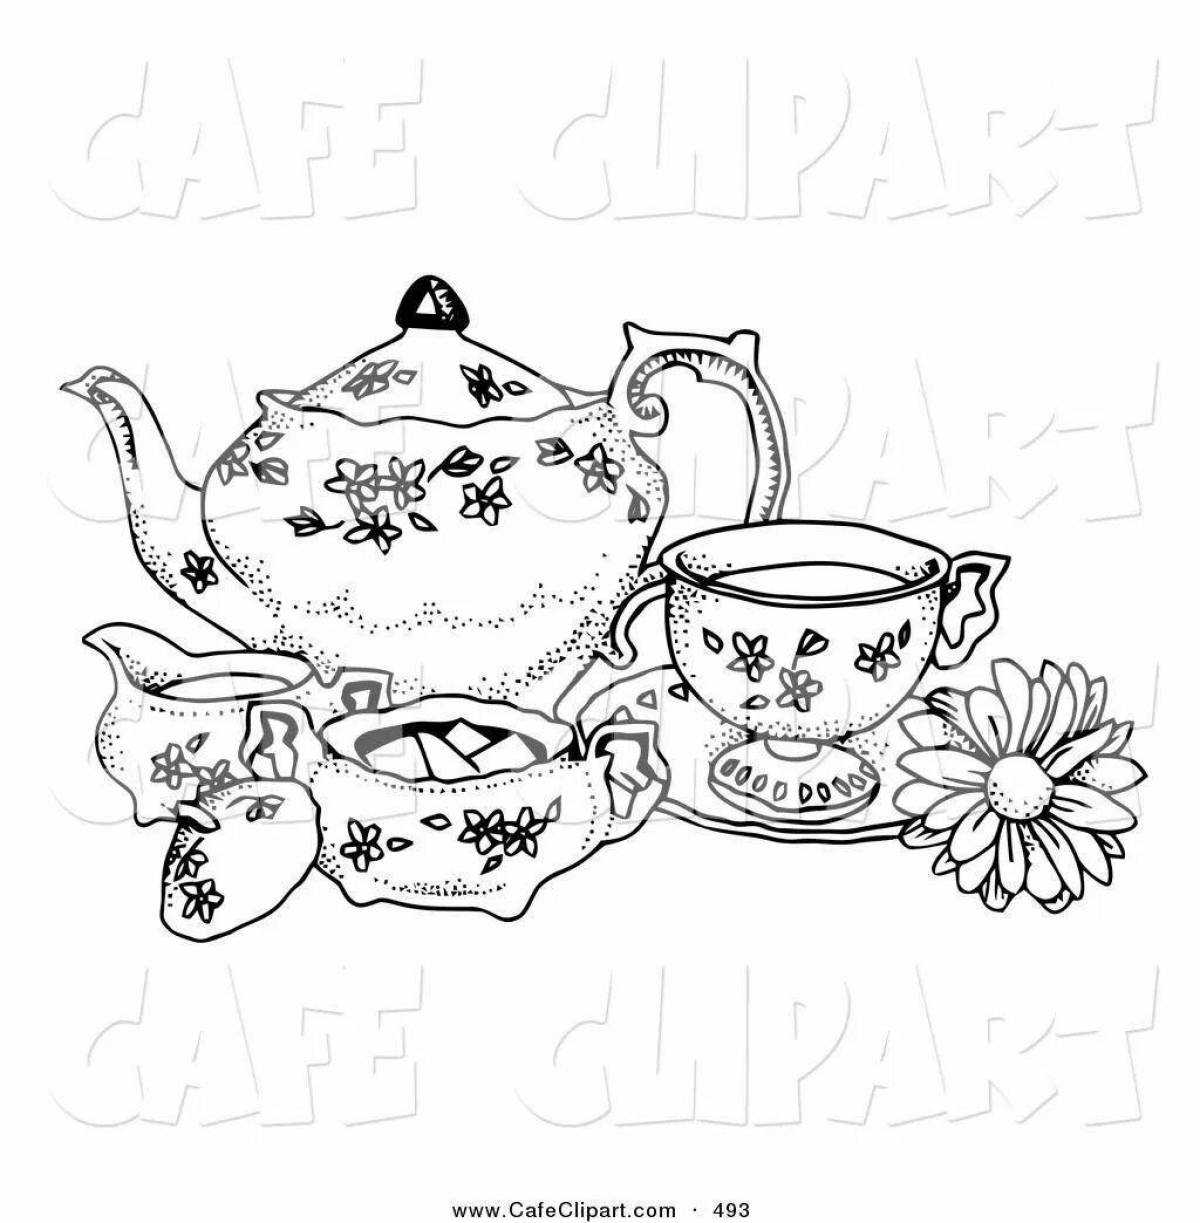 Coloring page joyful tea set